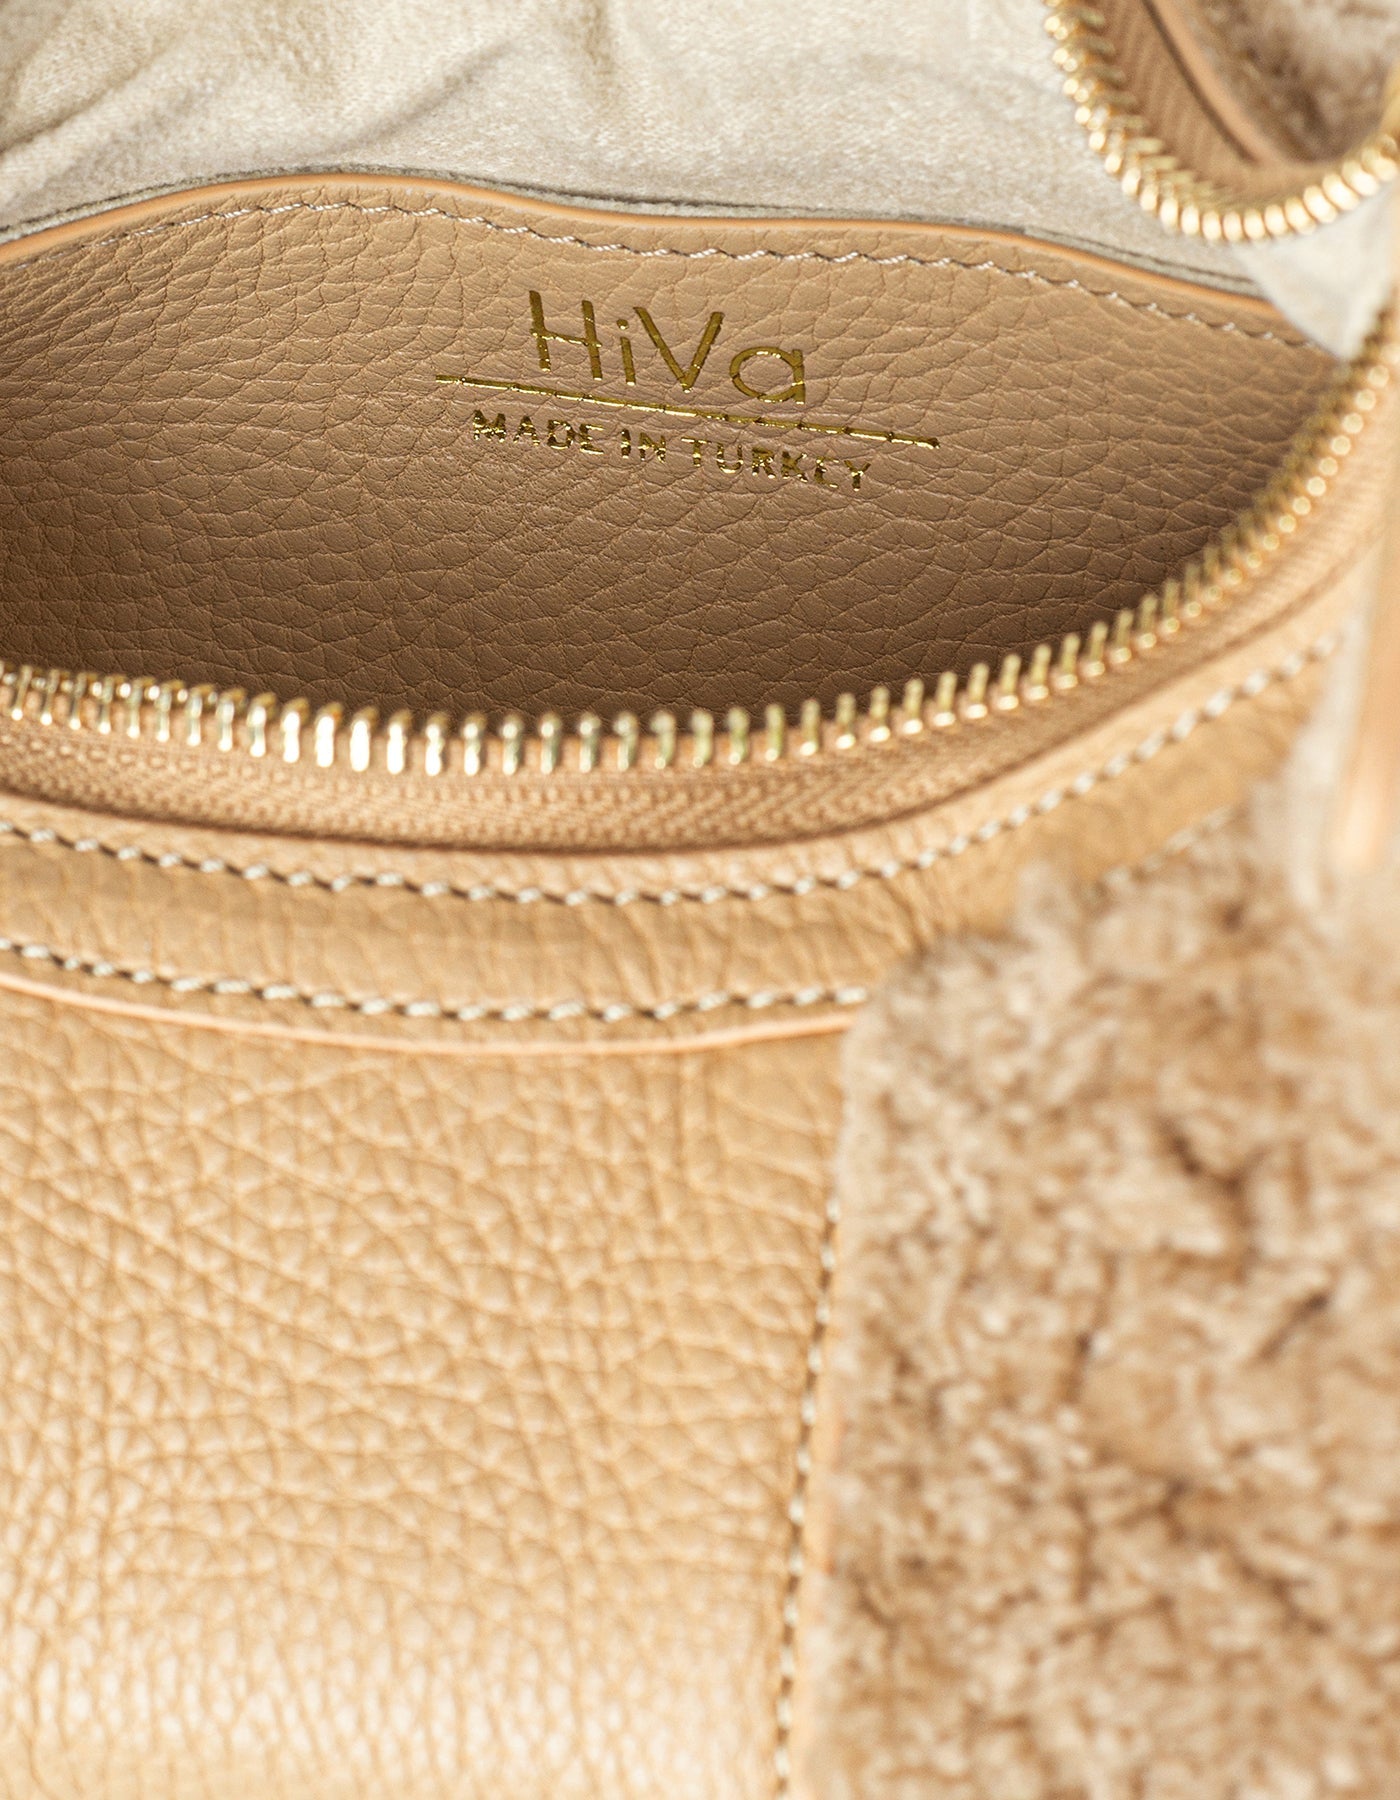 Mini Croissant - Finest Quality HiVa Atelier GmbH Leather Accessories